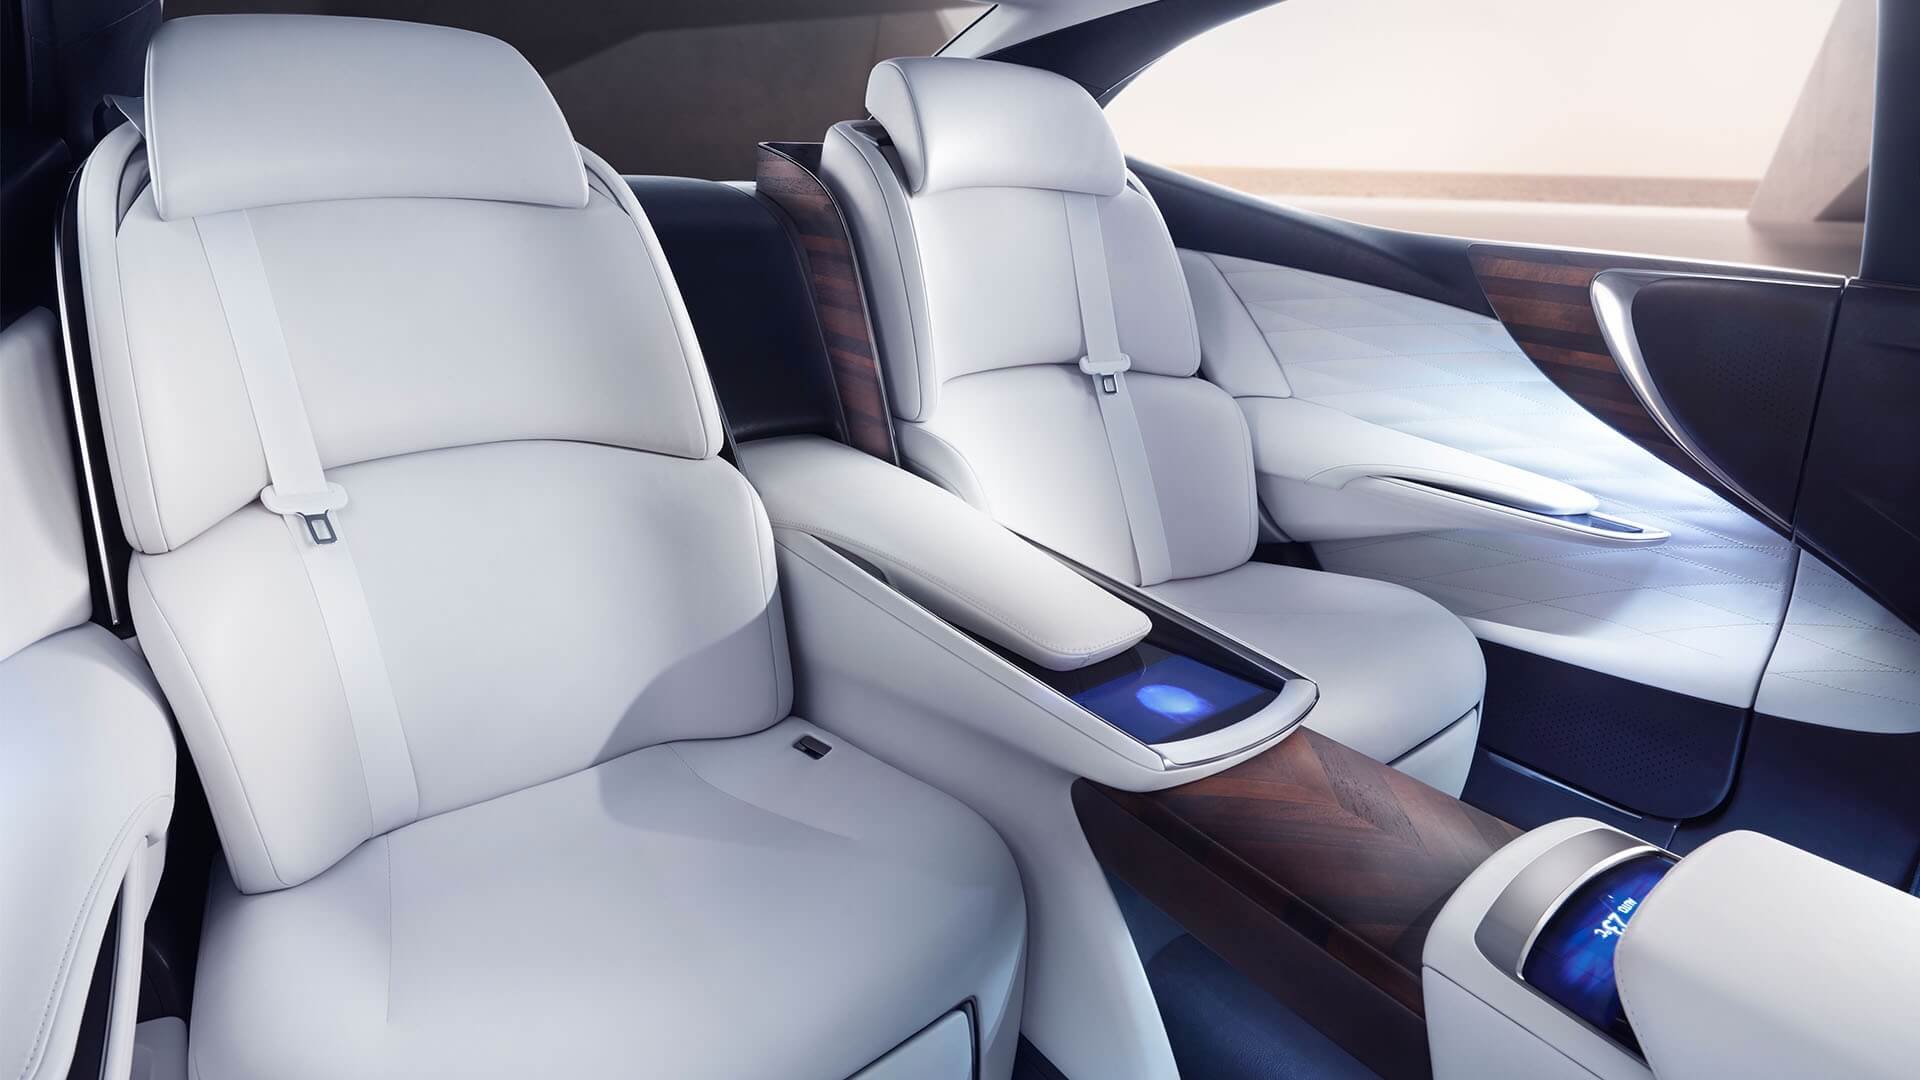 Lexus seats